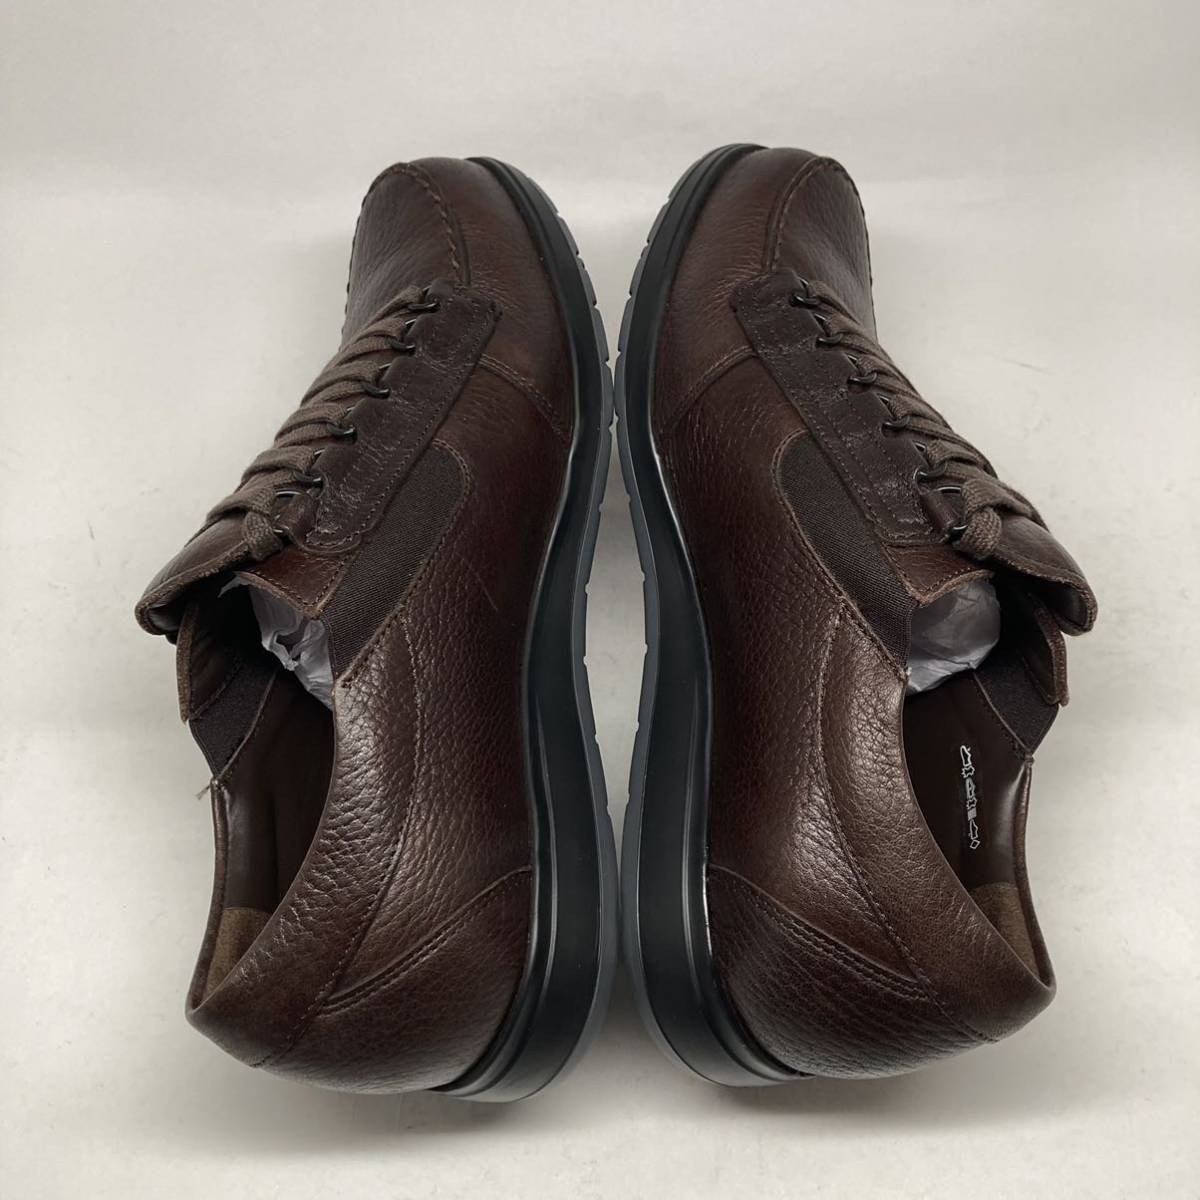  prompt decision! standard! MEPHISTO leather dark brown size EUR7 1/2 US8 comfort shoes /mefi -stroke 103011077